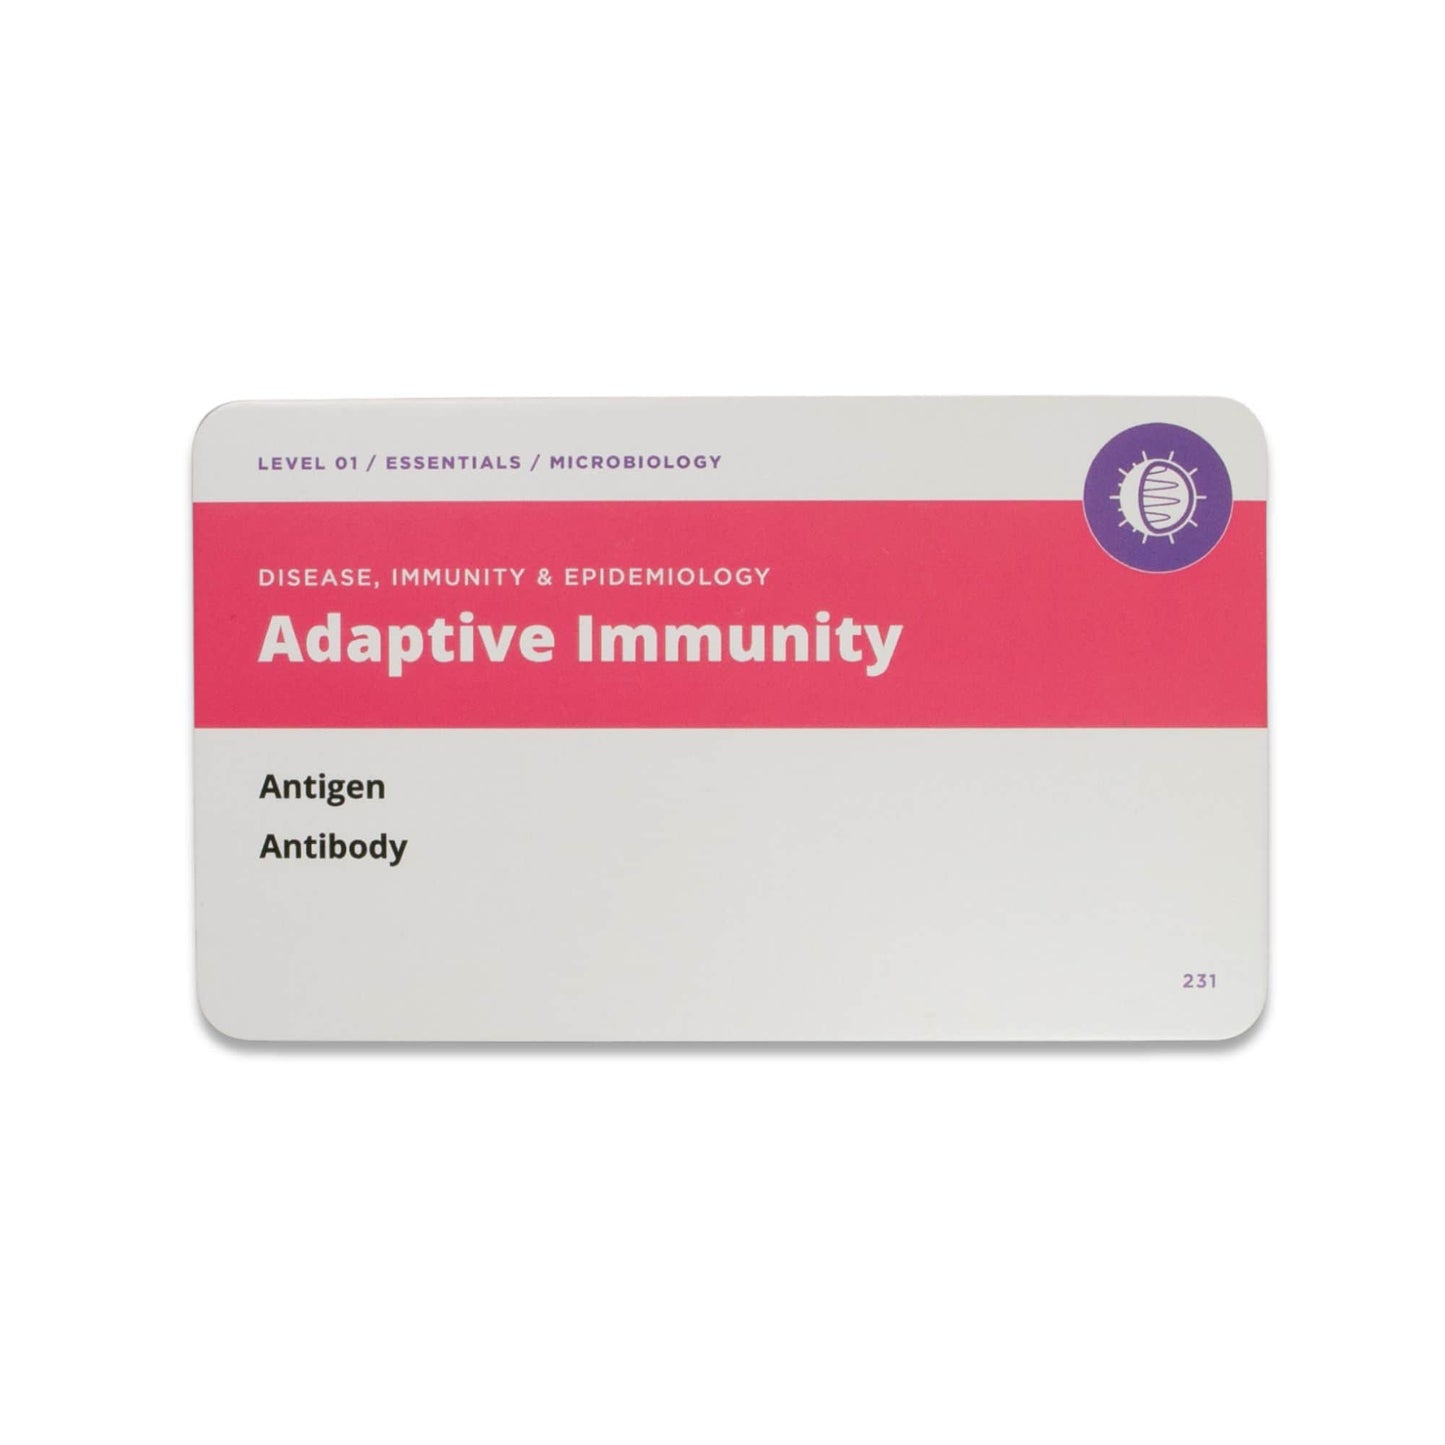 adaptive immunity card front